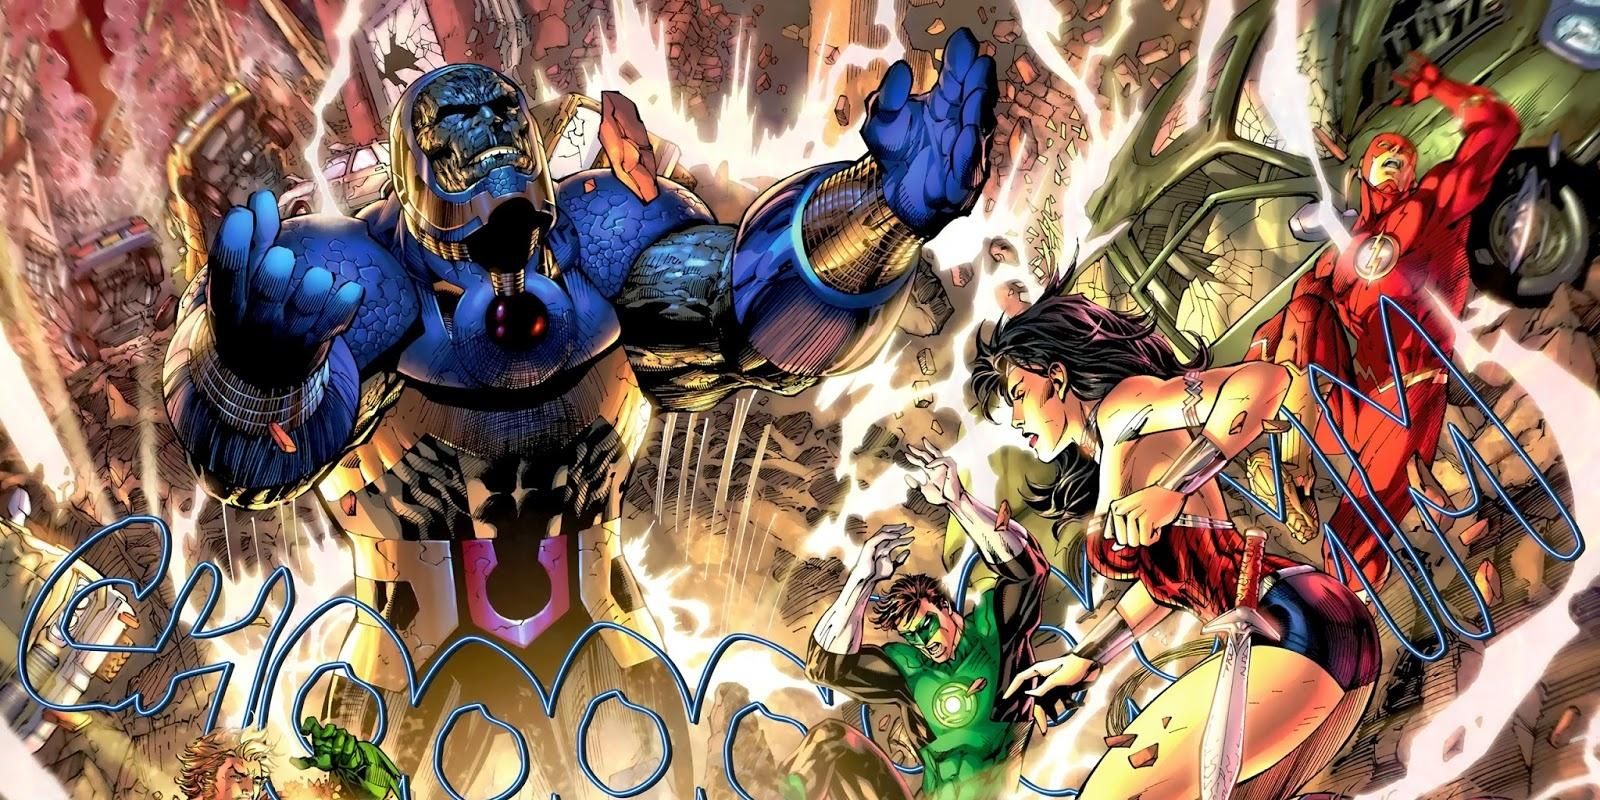 New 52 Darkseid vs Justice League